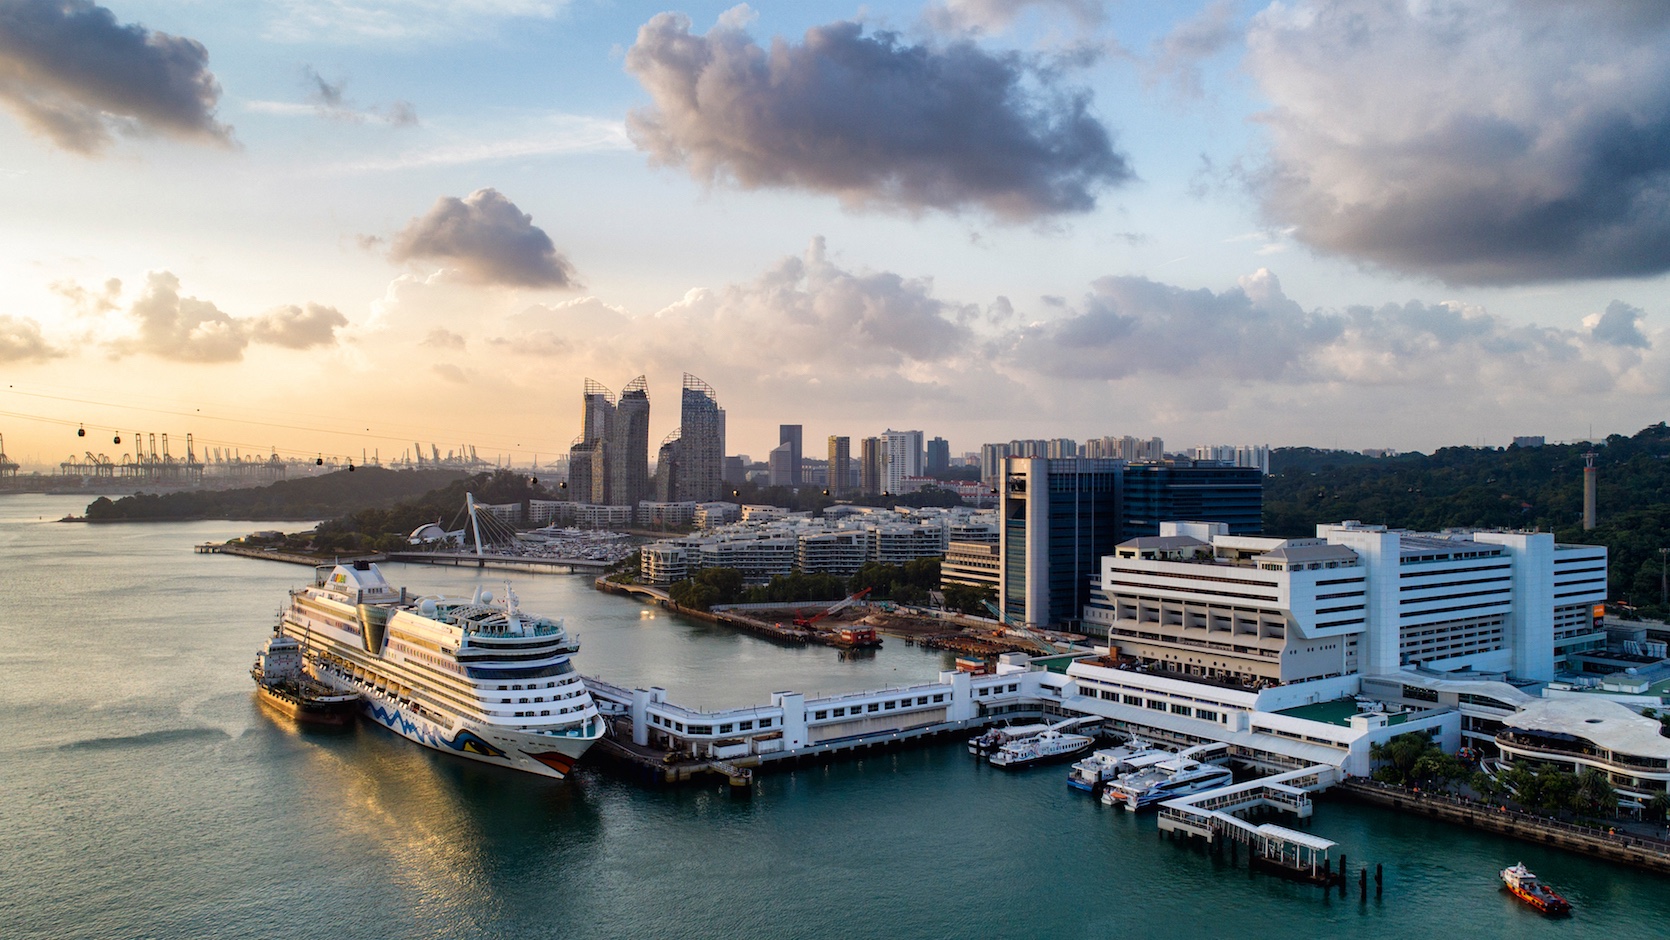 Singapore Cruise Centre (ferry & cruise)